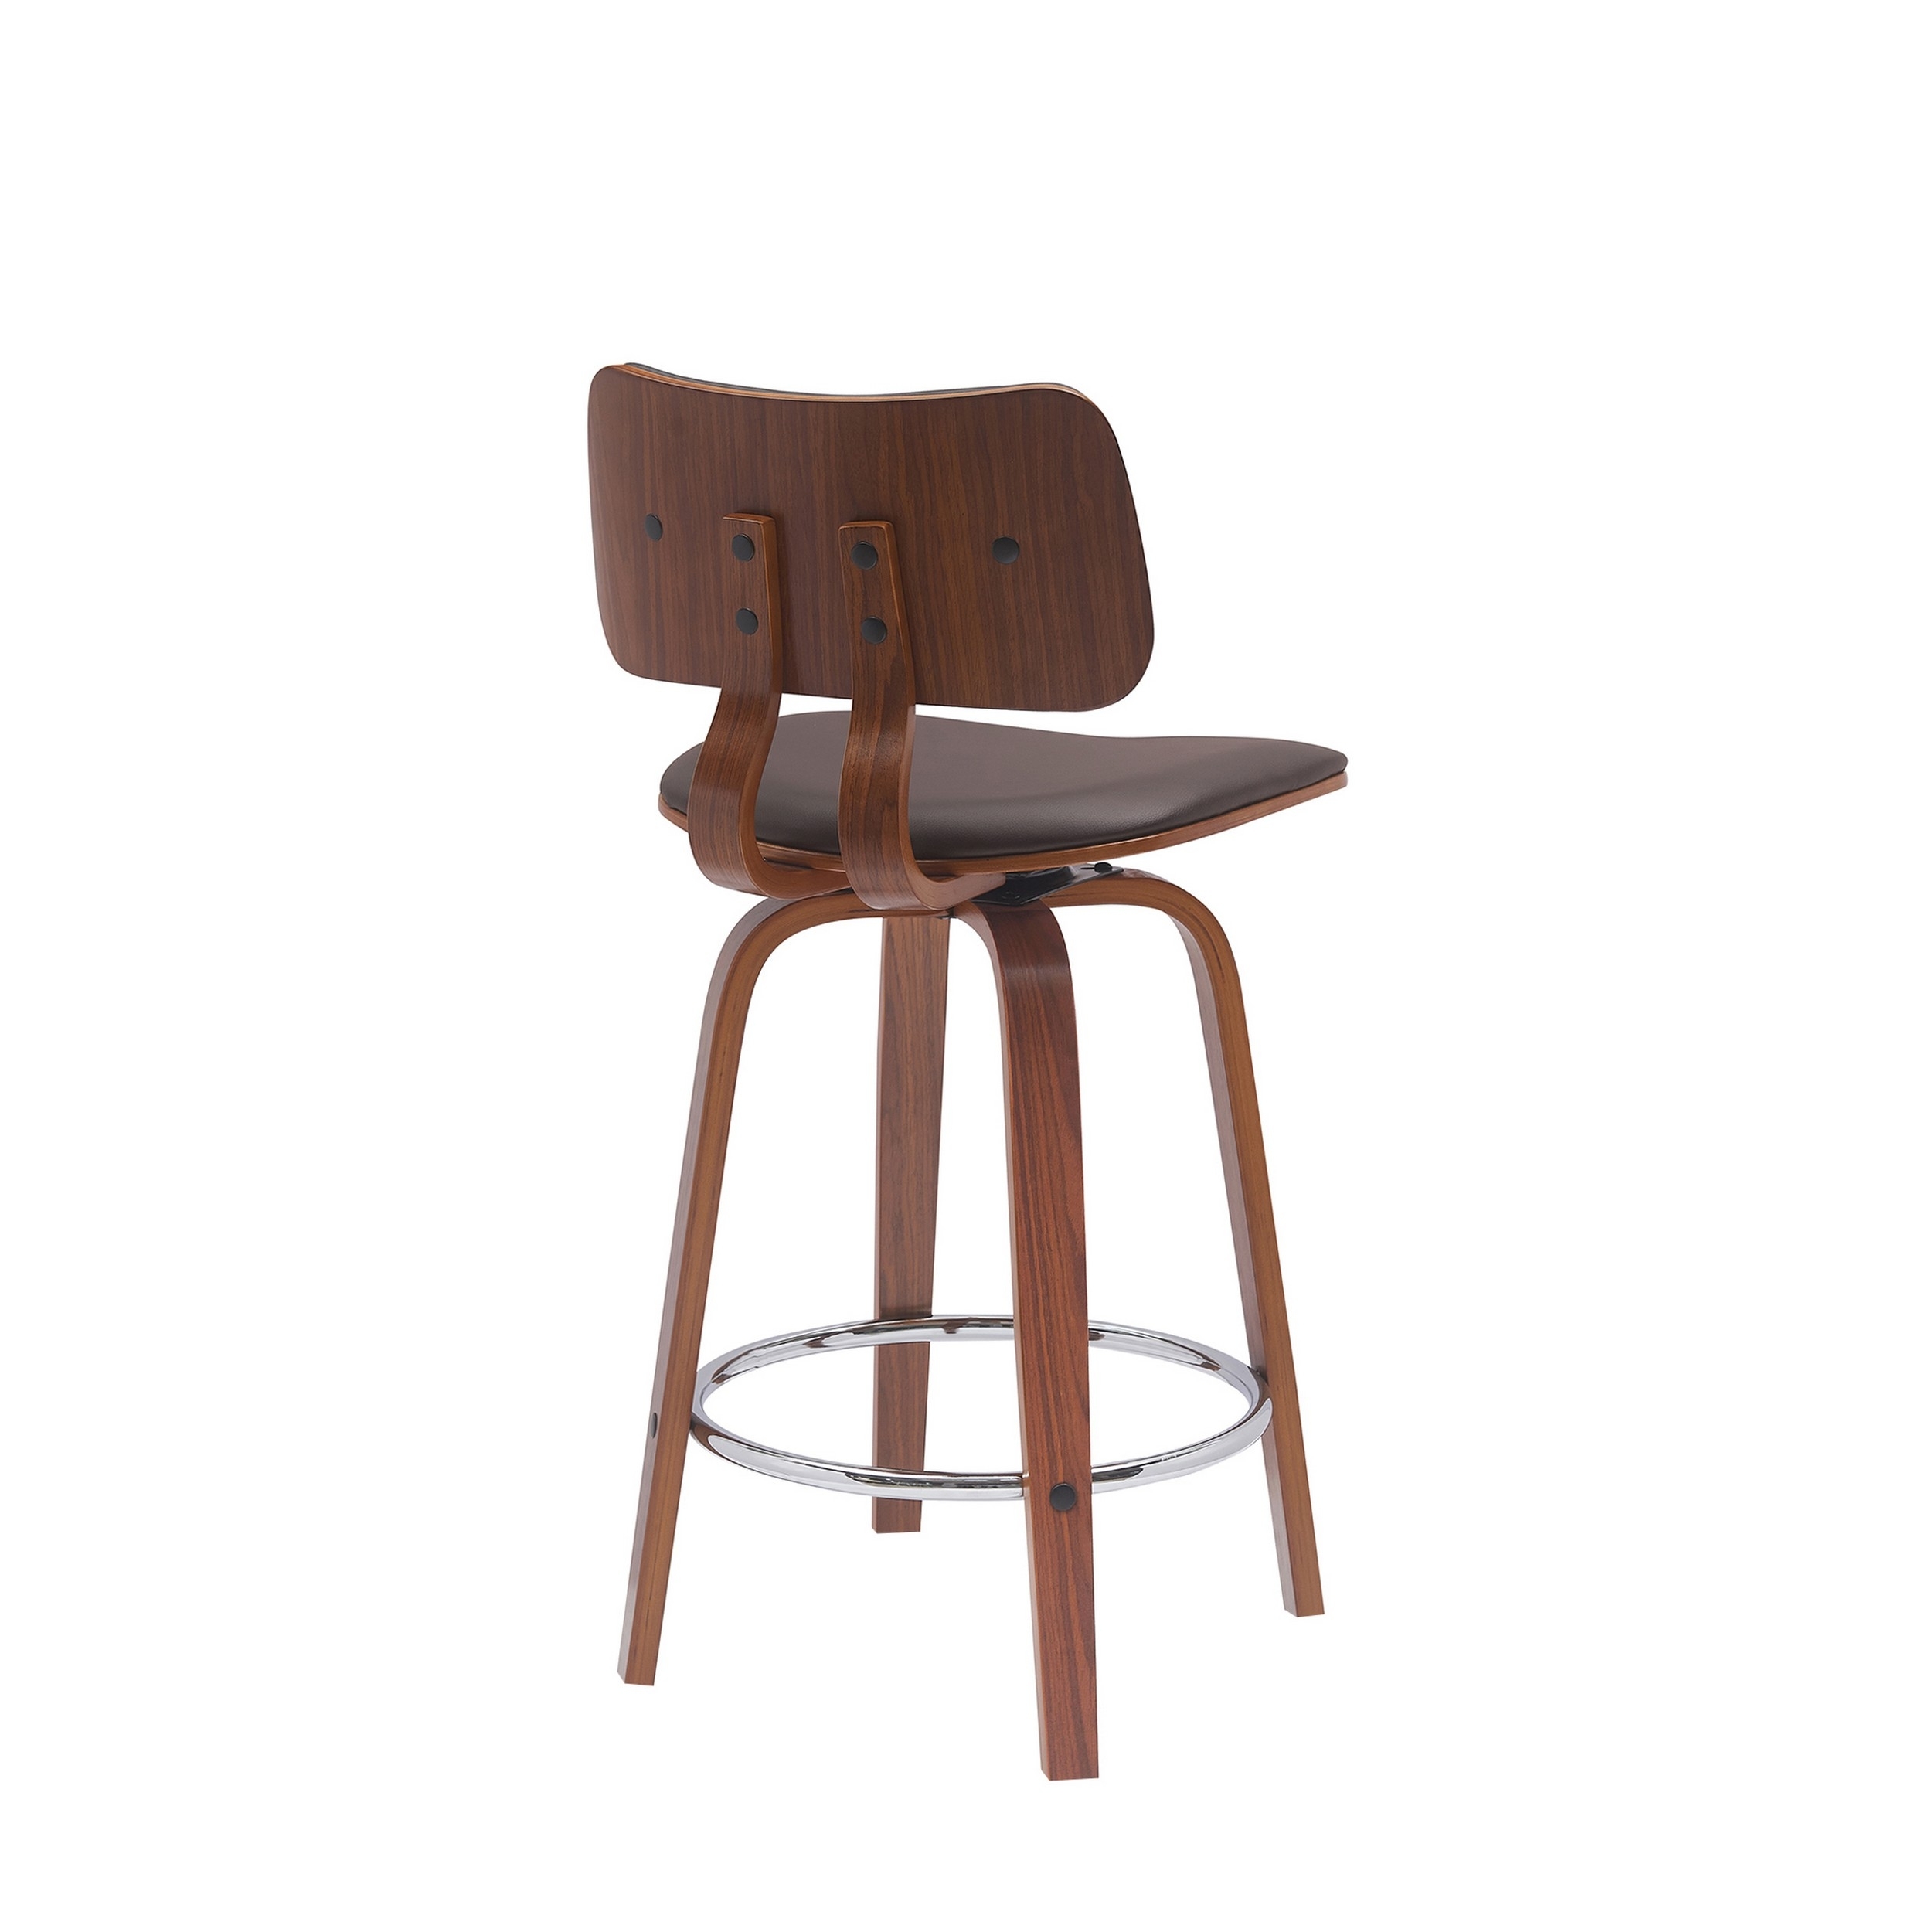 Pino 26 Inch Swivel Counter Stool Chair, Faux Leather, Walnut Brown Wood - Saltoro Sherpi